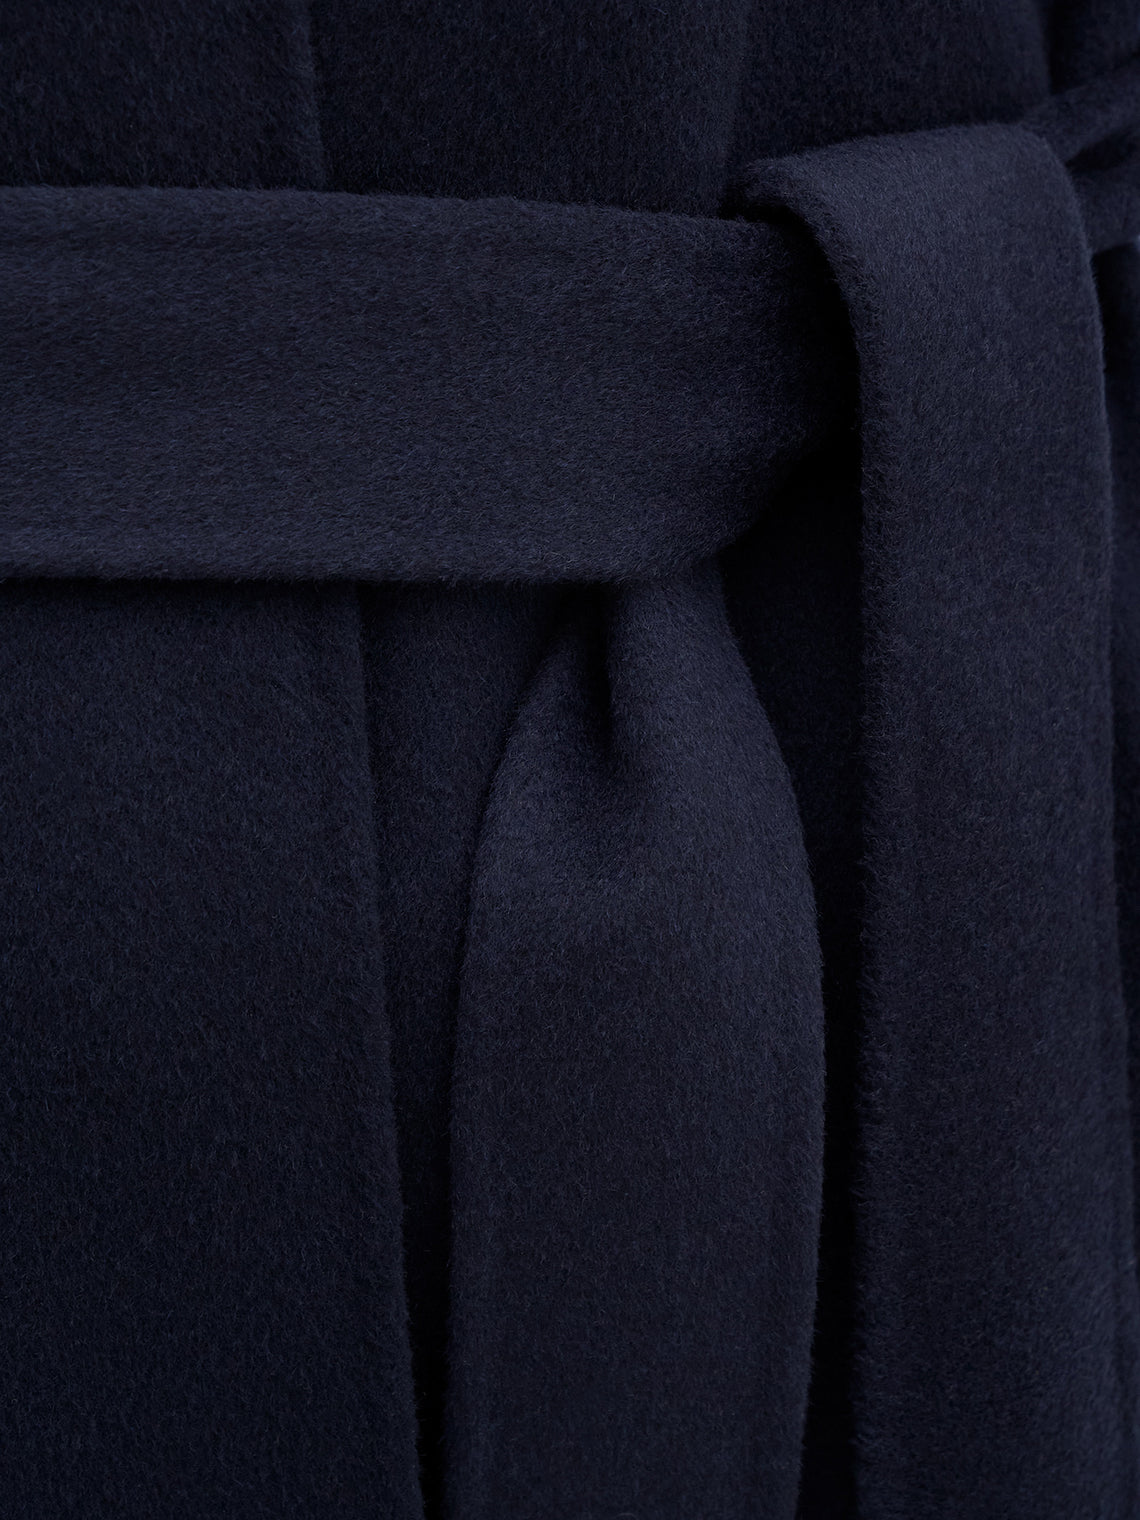 Alexa coat by Filippa K - dark blue